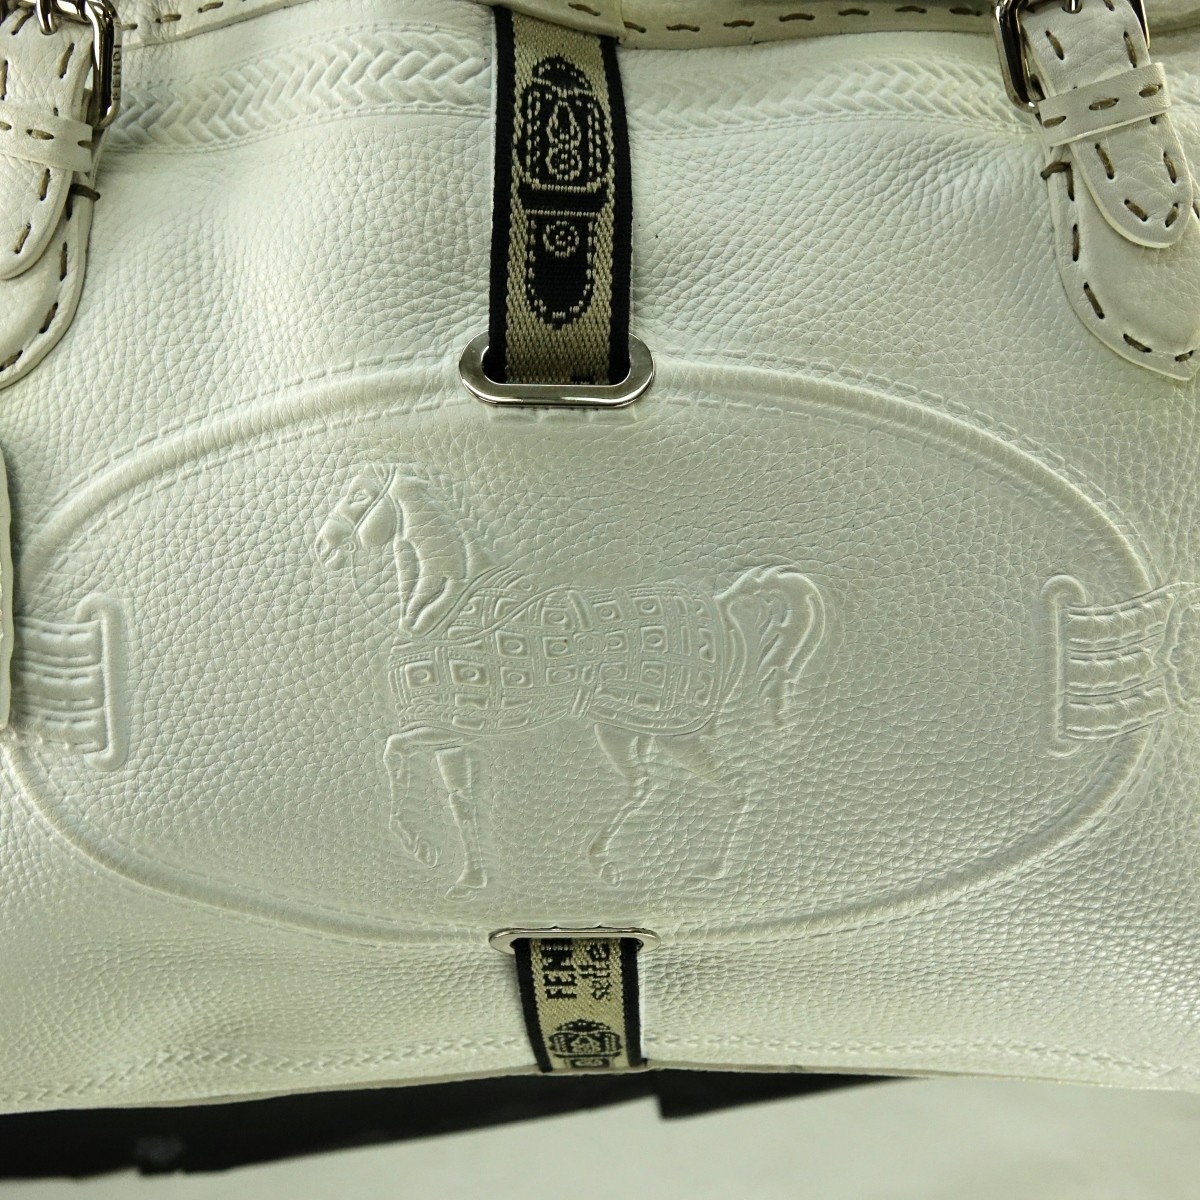 Fendi White Leather Selleria Tote Horse Bag